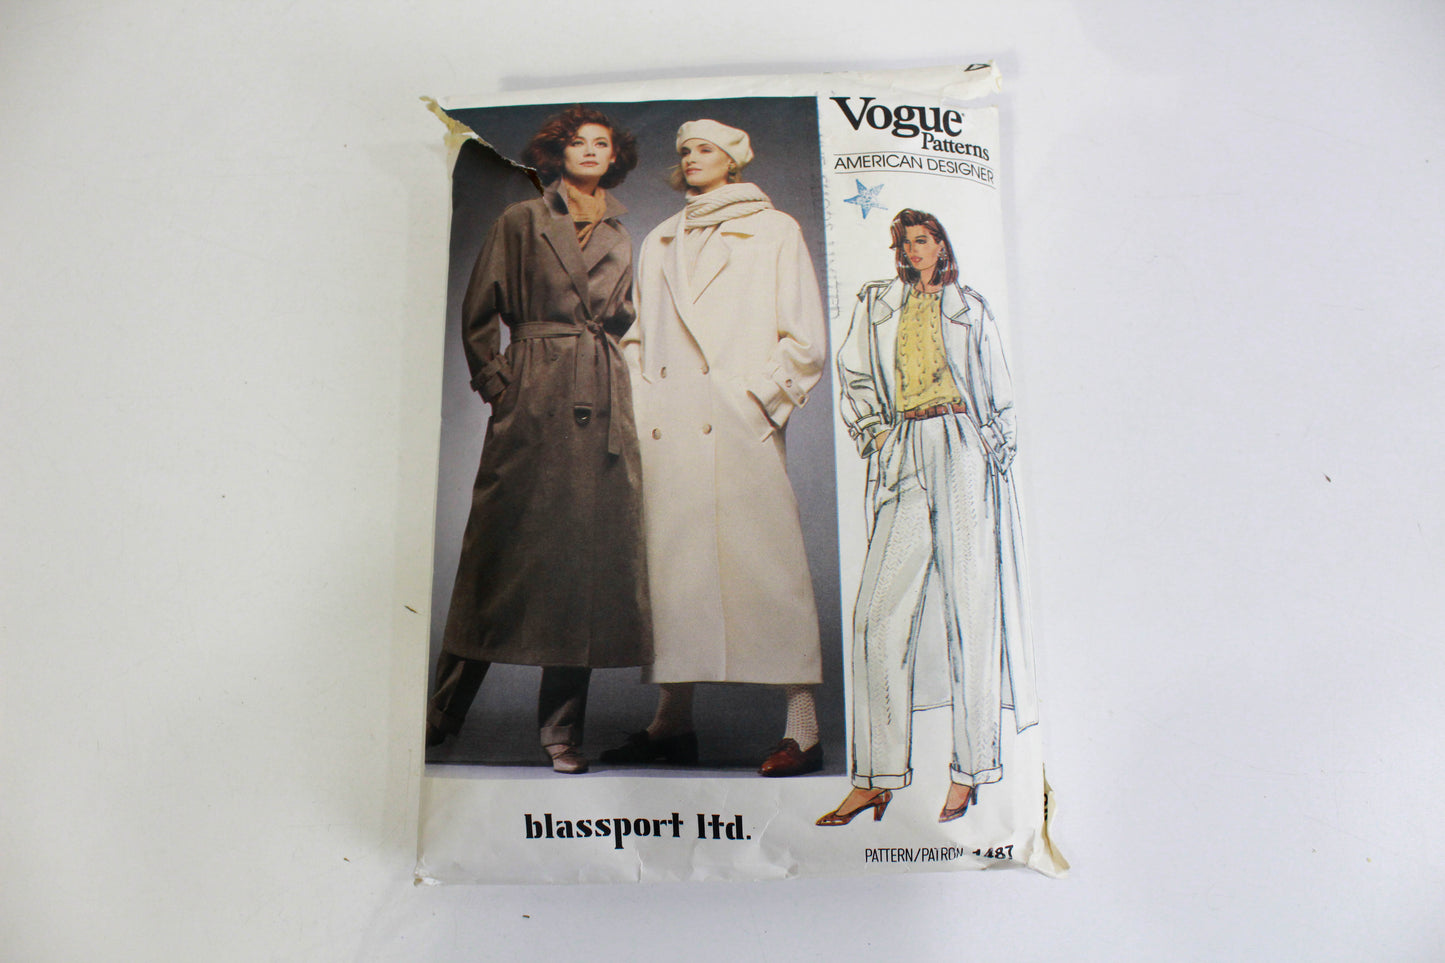 vogue american designer 1487 sewing pattern womens coat blassport